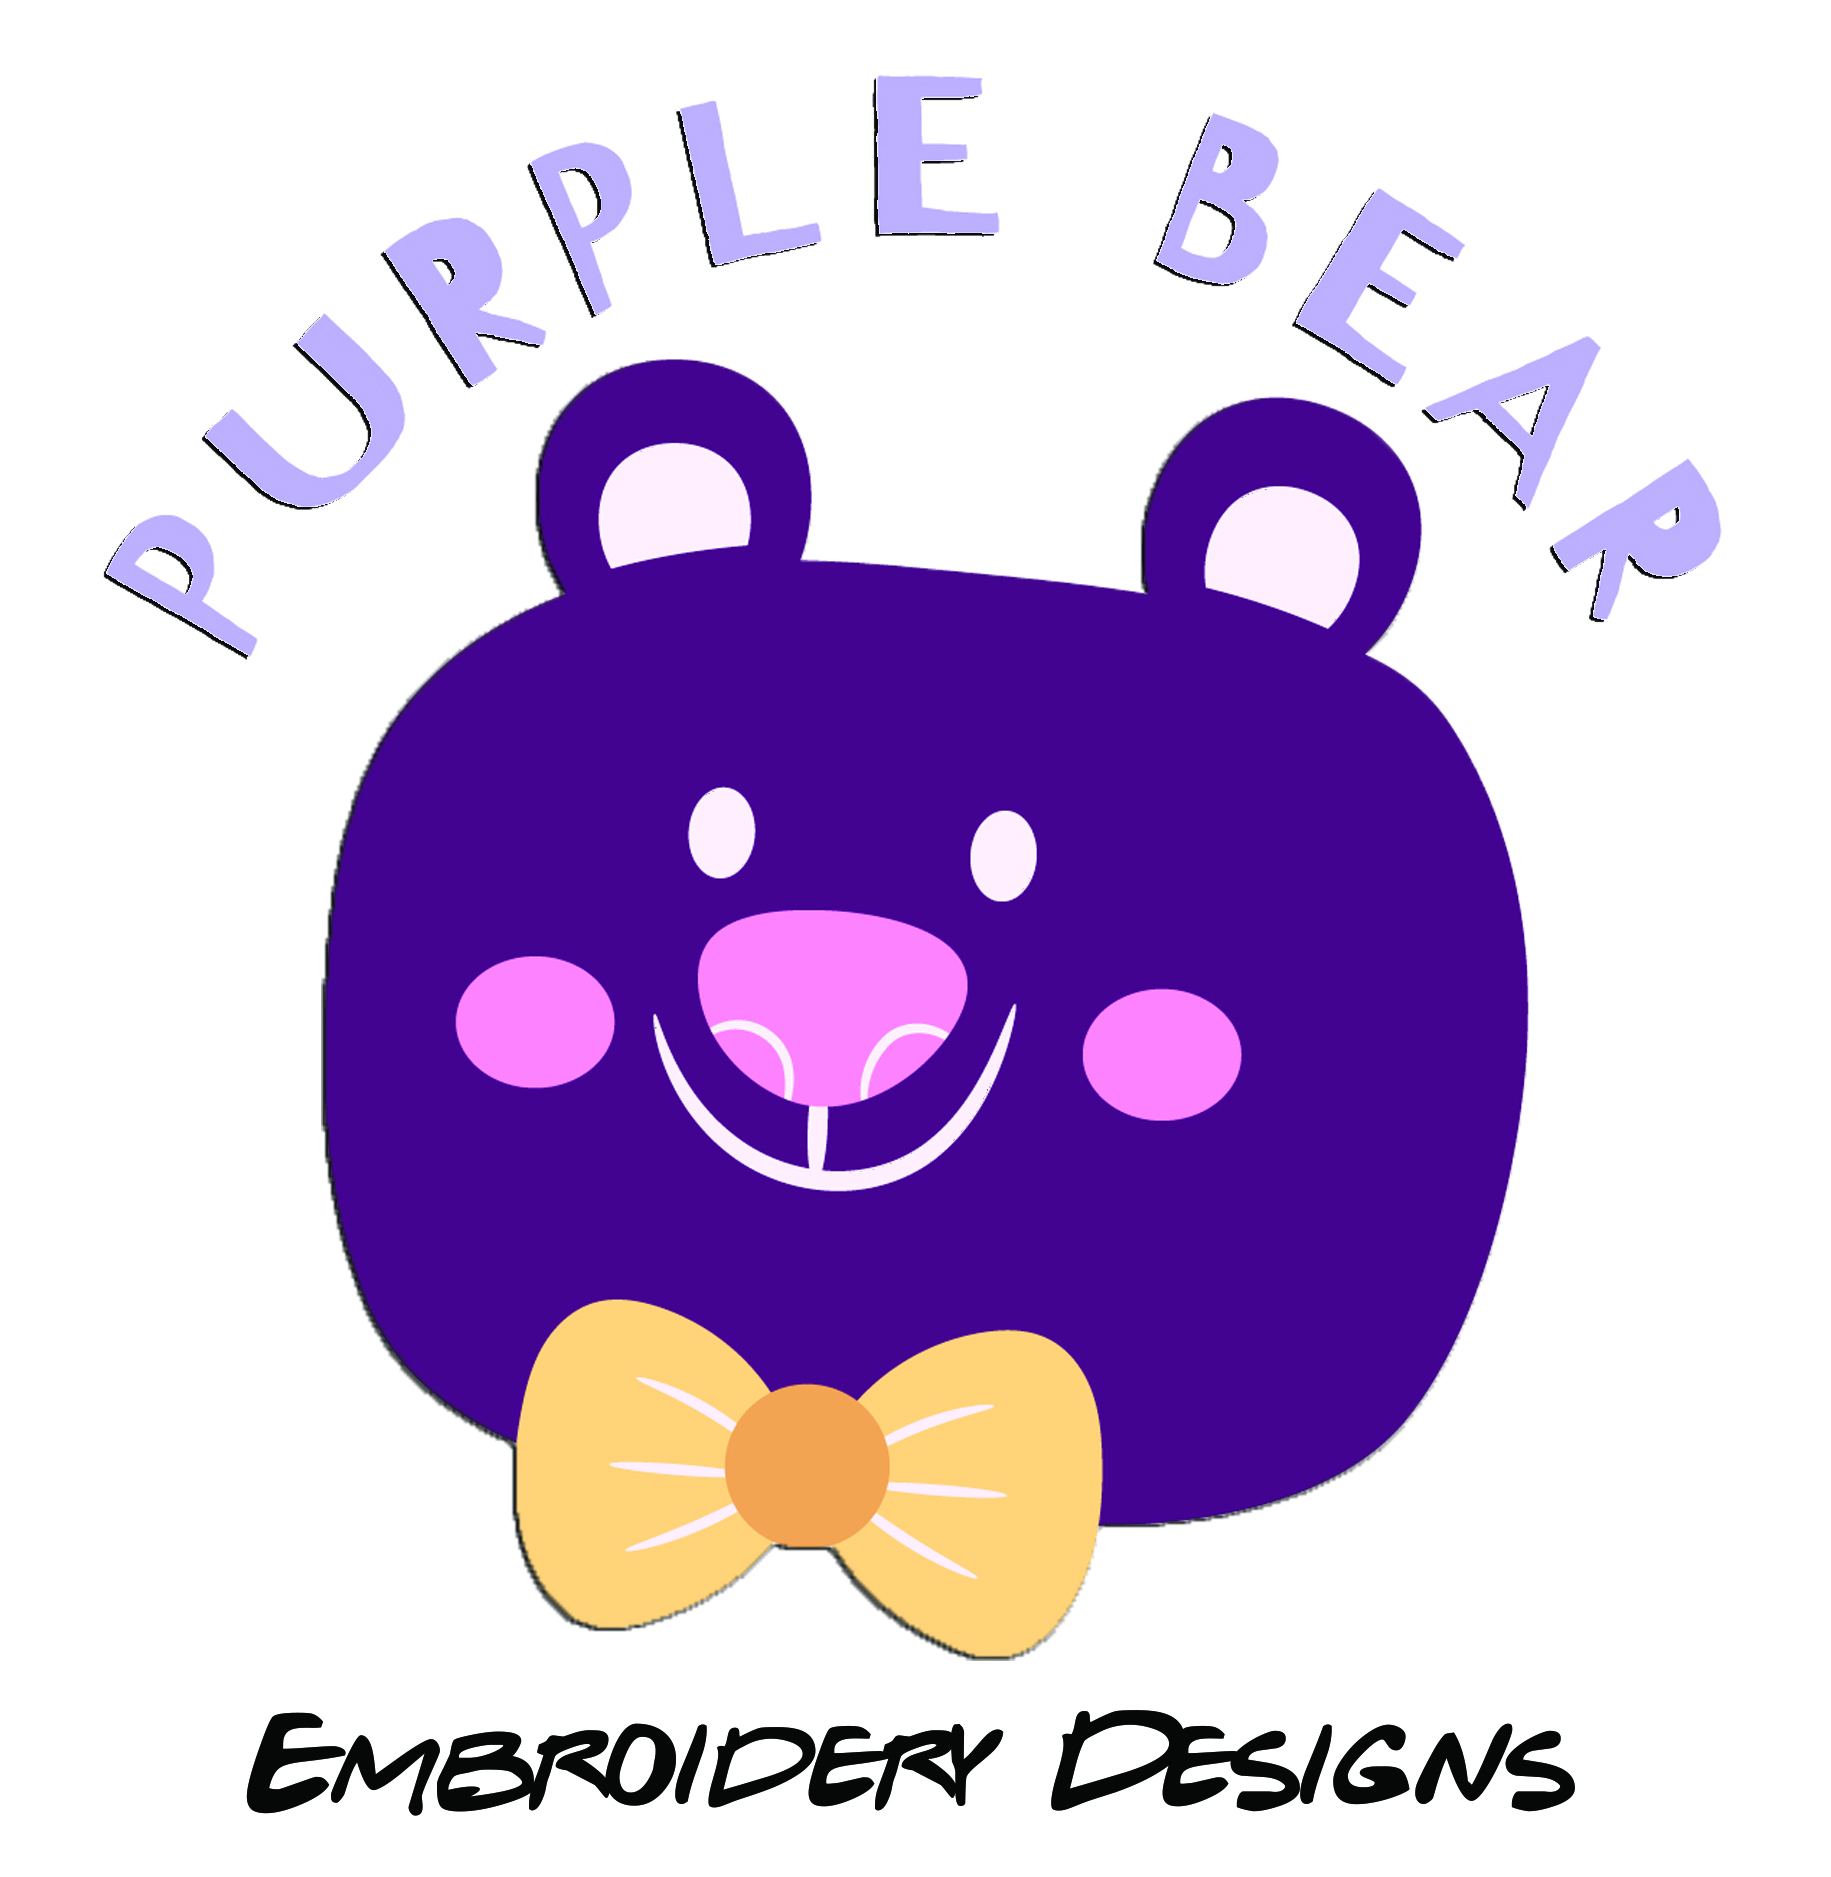 Purple Bear Embroidery Designs